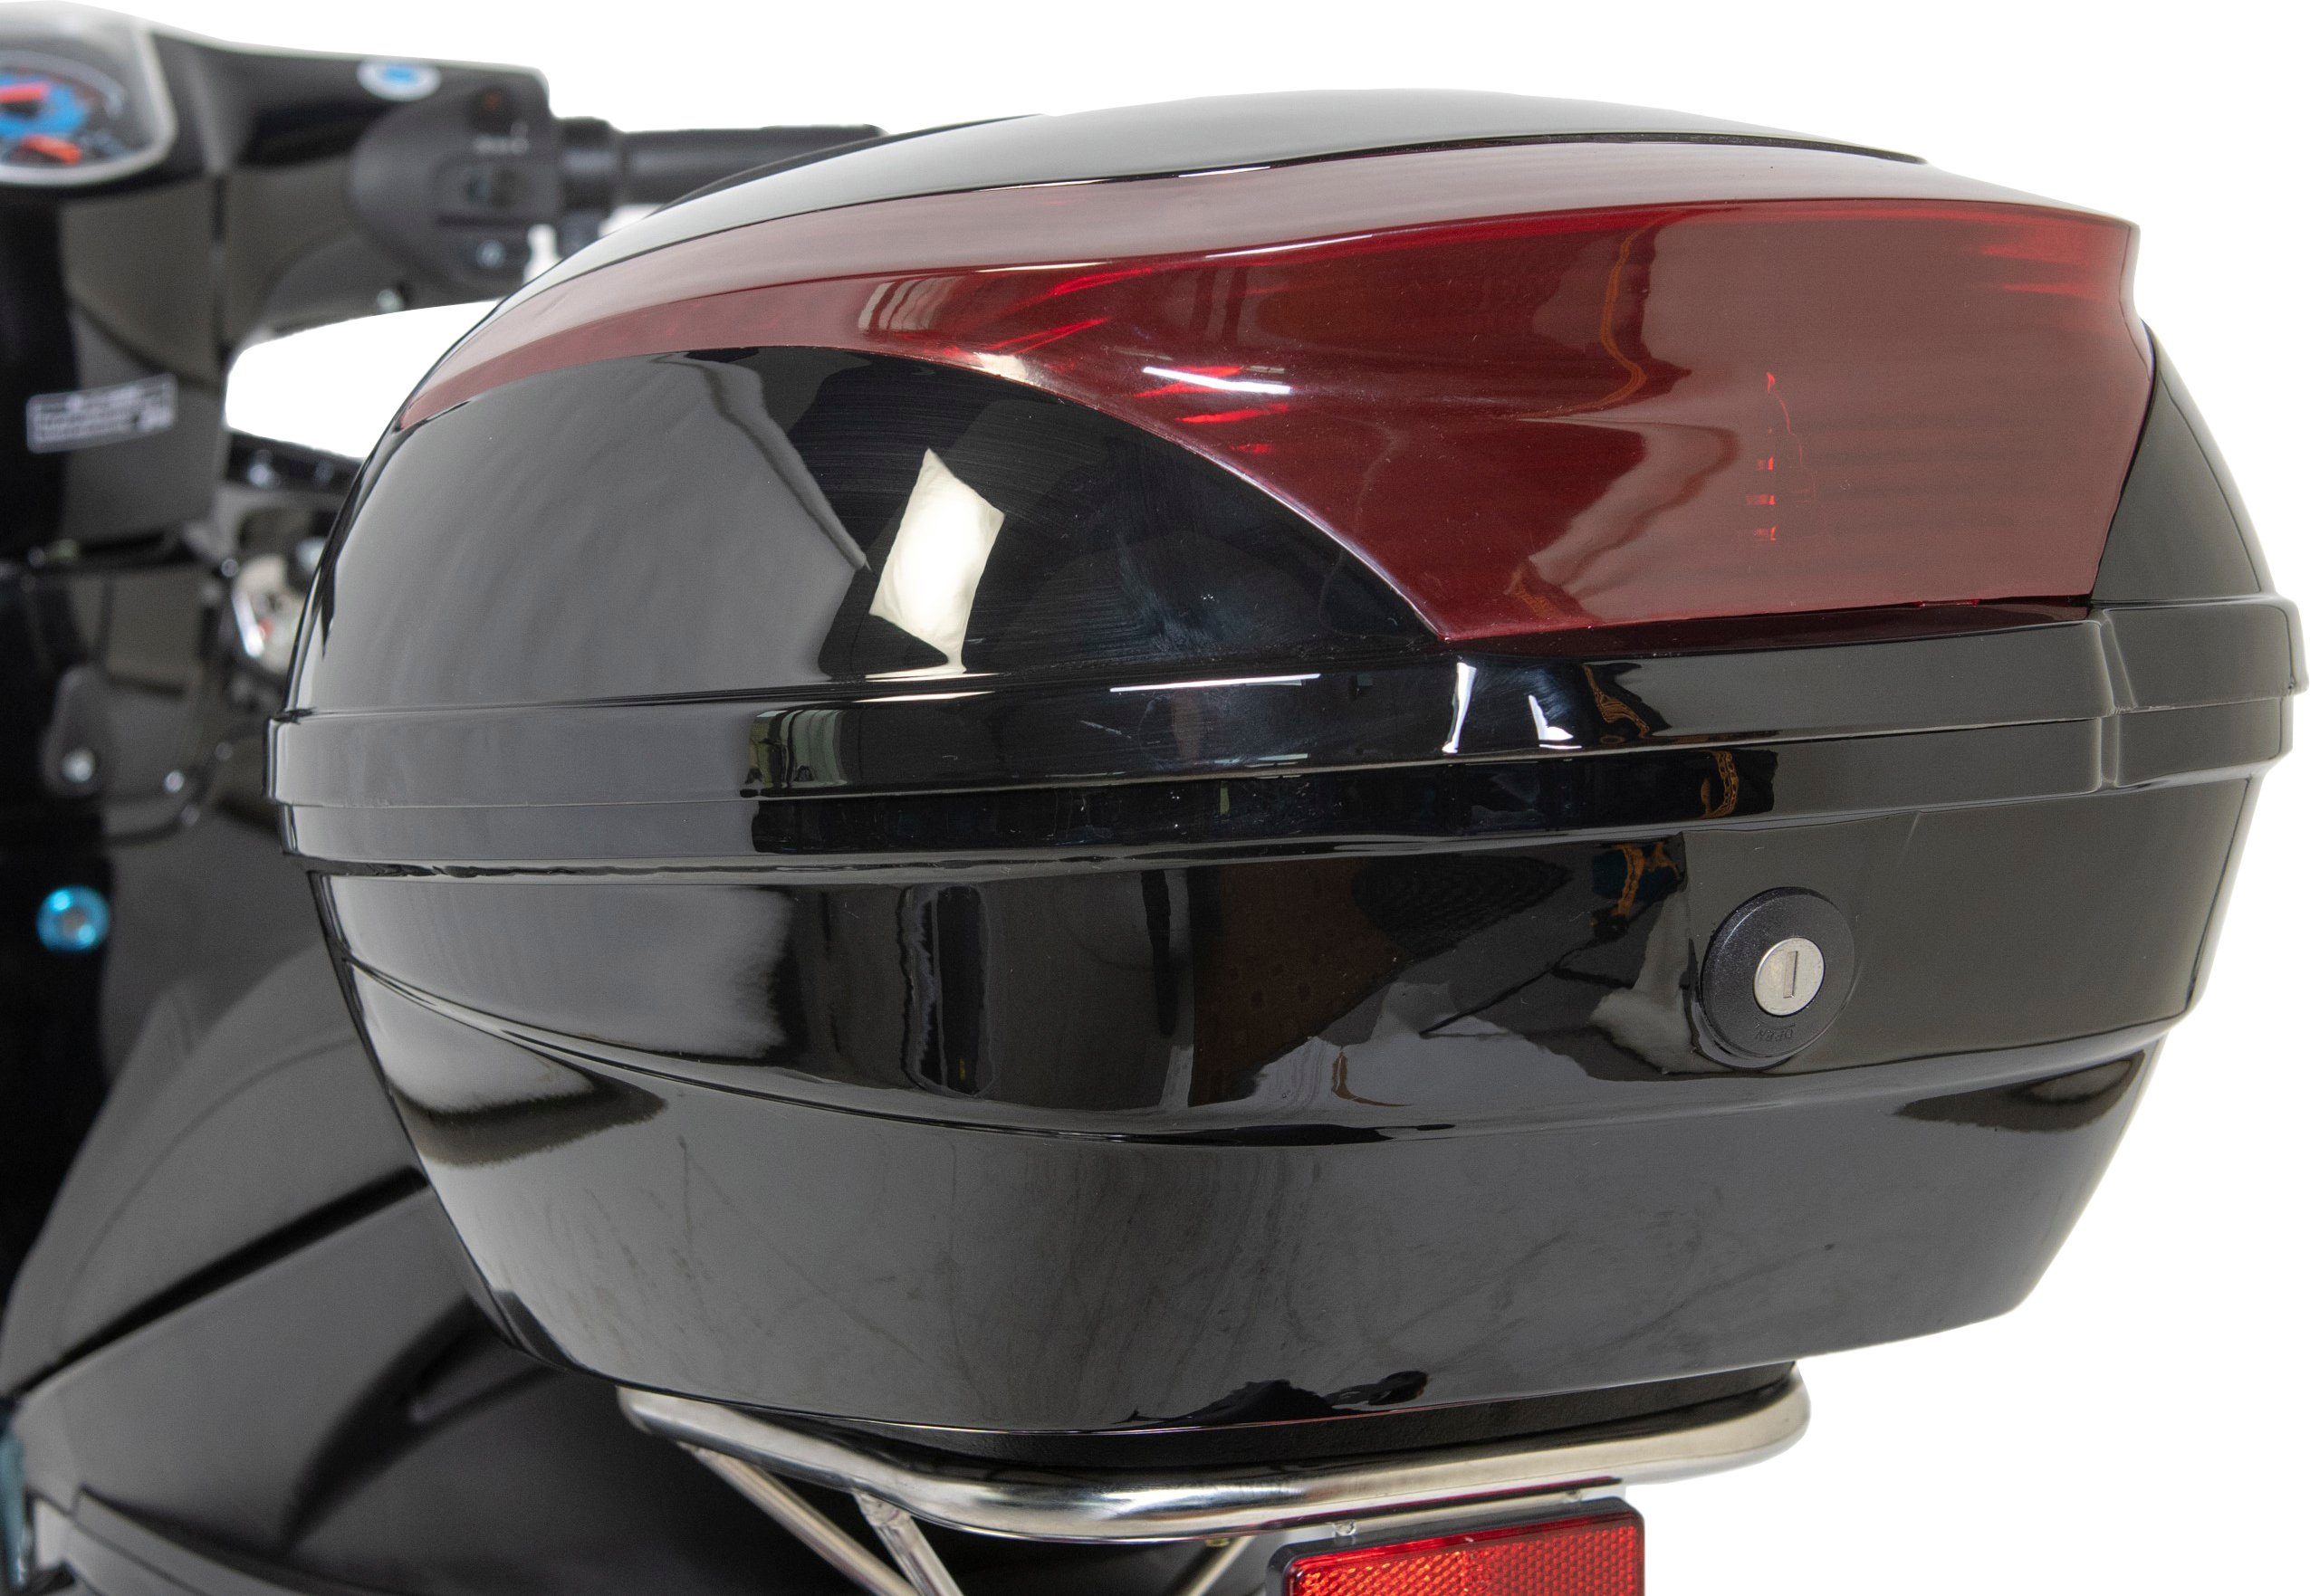 GT UNION Motorroller Sonic Topcase silber-schwarz 2 X 50 tlg., 5, ccm, inkl. (Komplett-Set, Topcase), 50-45, km/h, mit 45 Euro